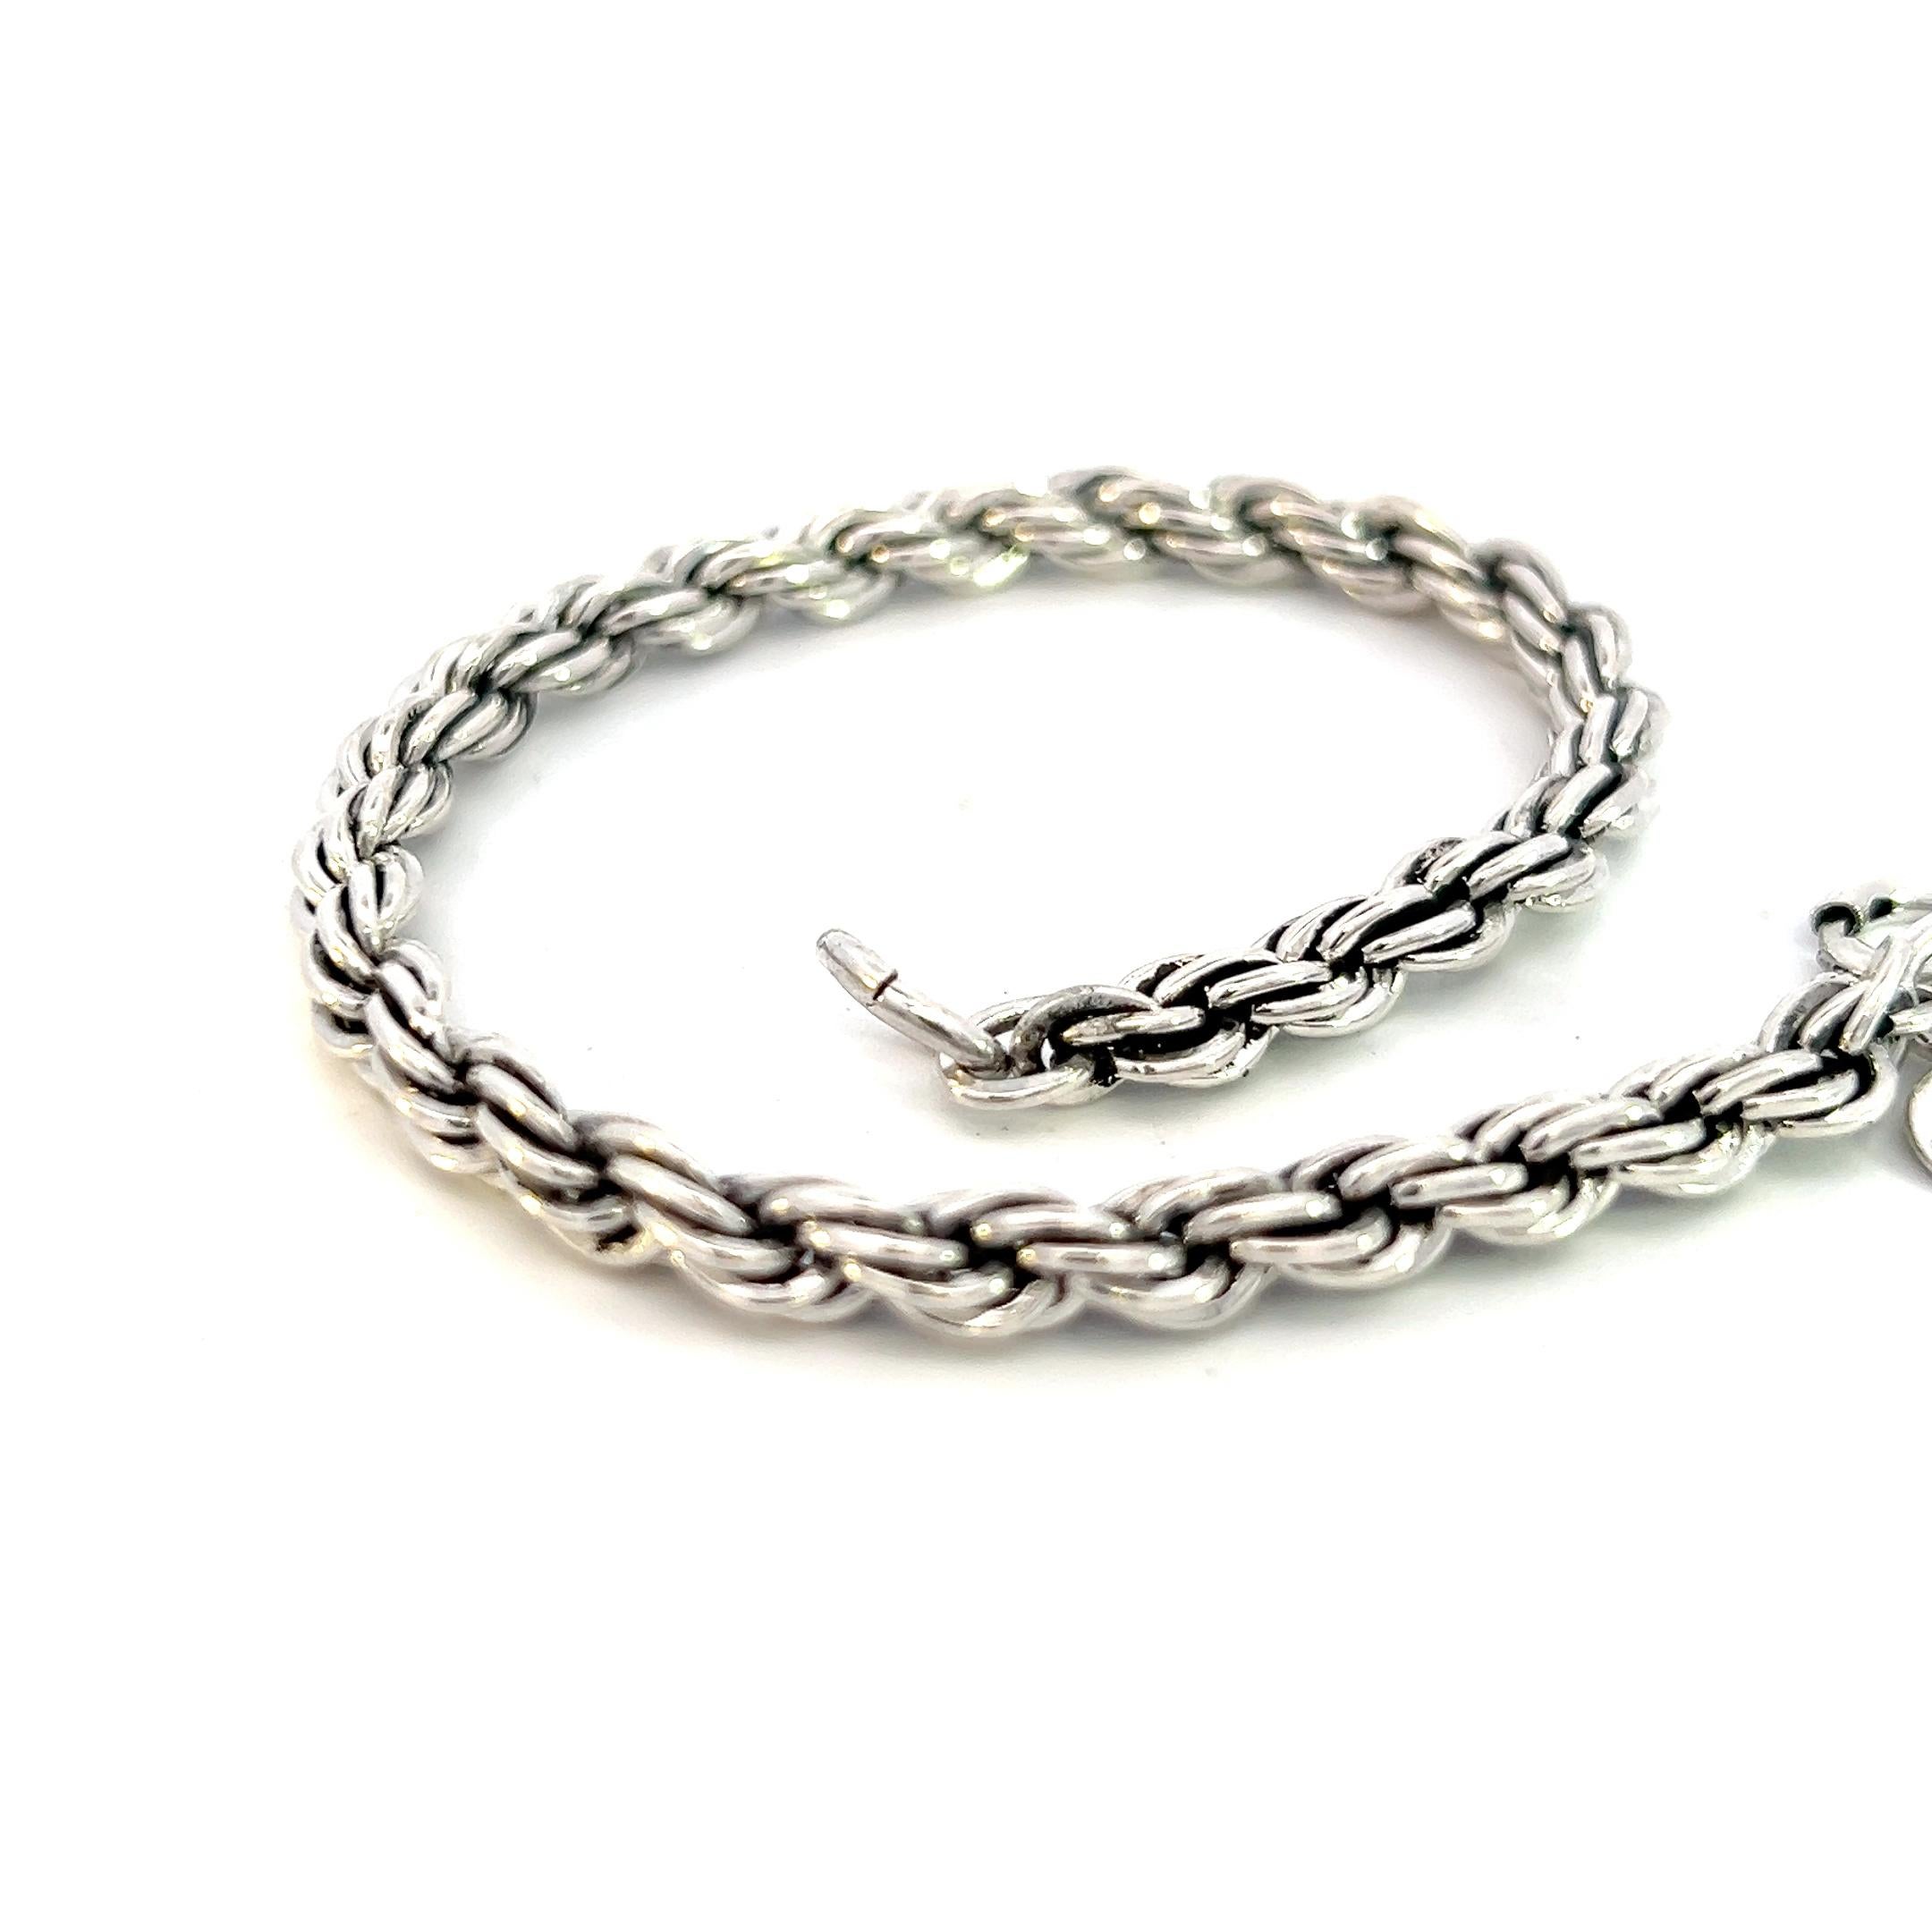 Authentic Tiffany & Co Estate Rope Chain Bracelet 8